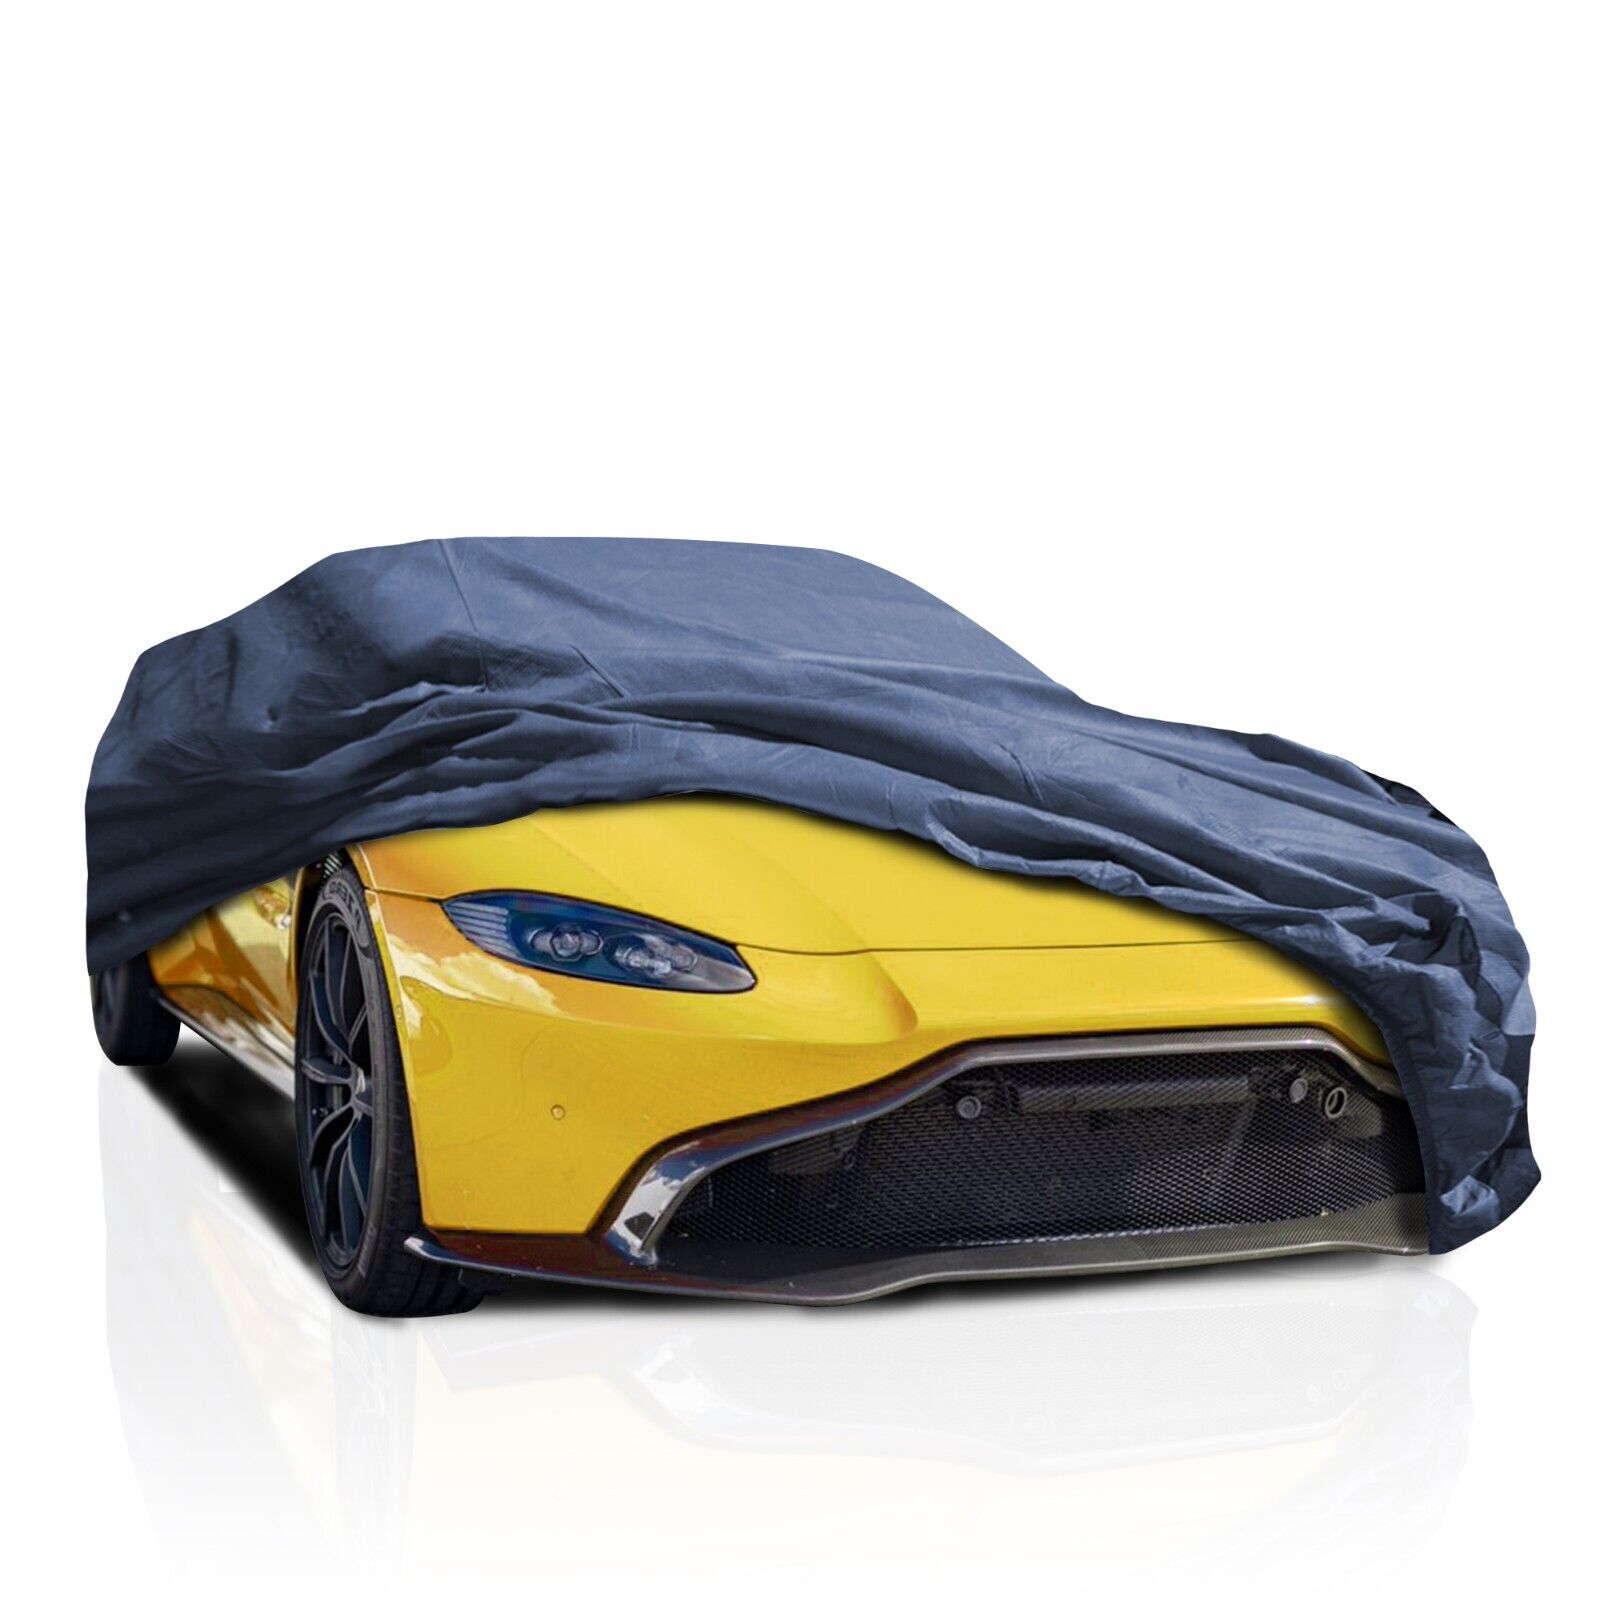 [CCT] 4 Layer Car Cover for Aston Martin DB9 2010 2011 2012 2013 2014 2015 2016